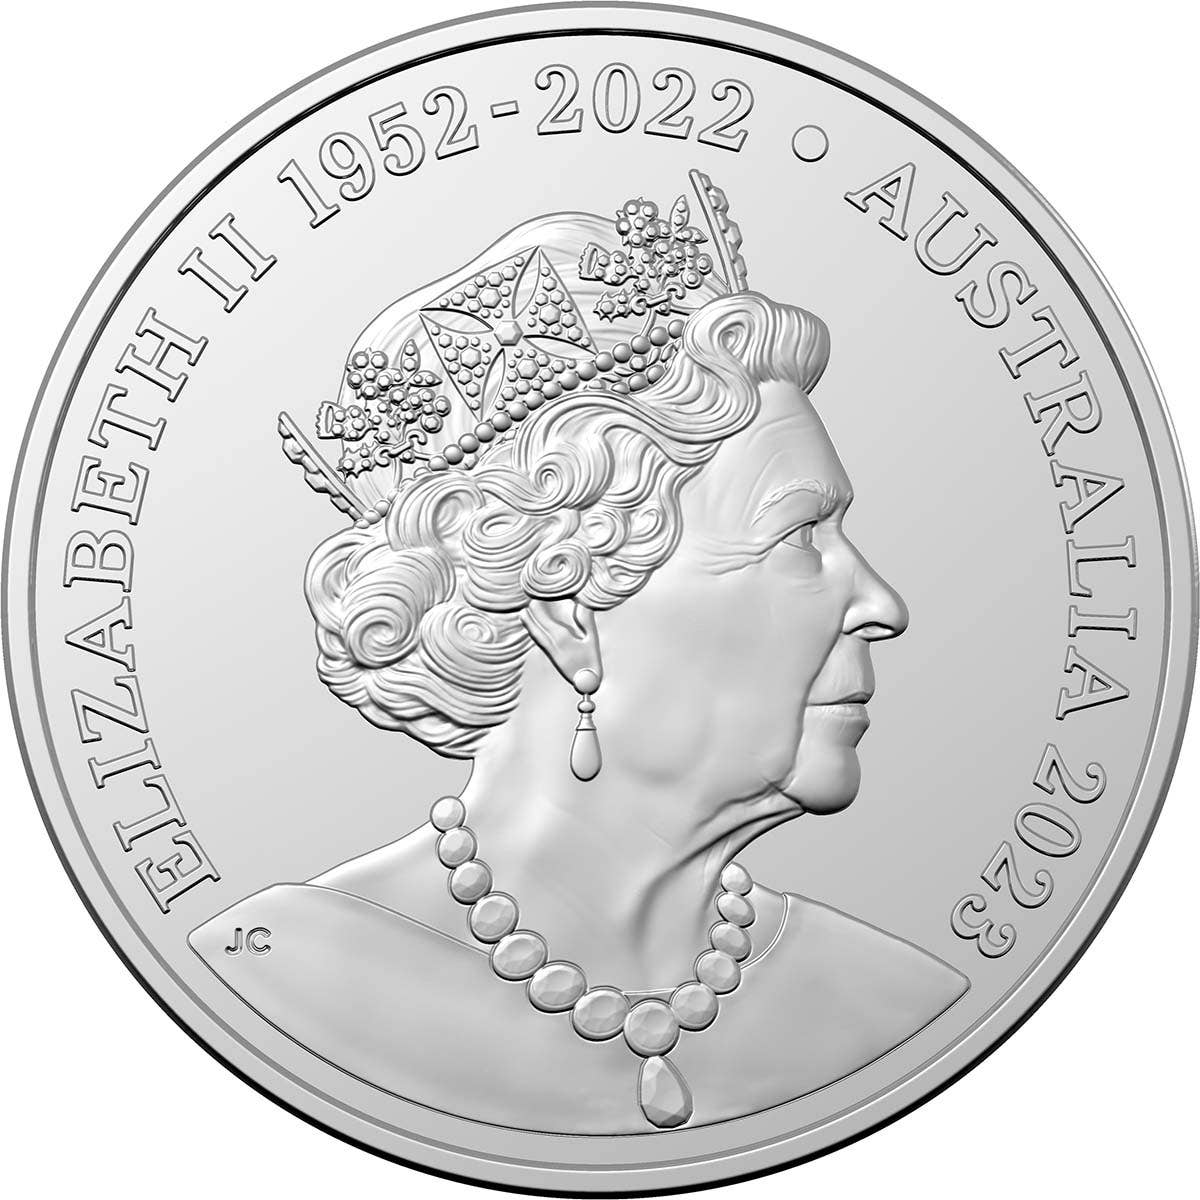 Edward the Emu 35th Anniversary 2023 20c Colour Uncirculated Coin